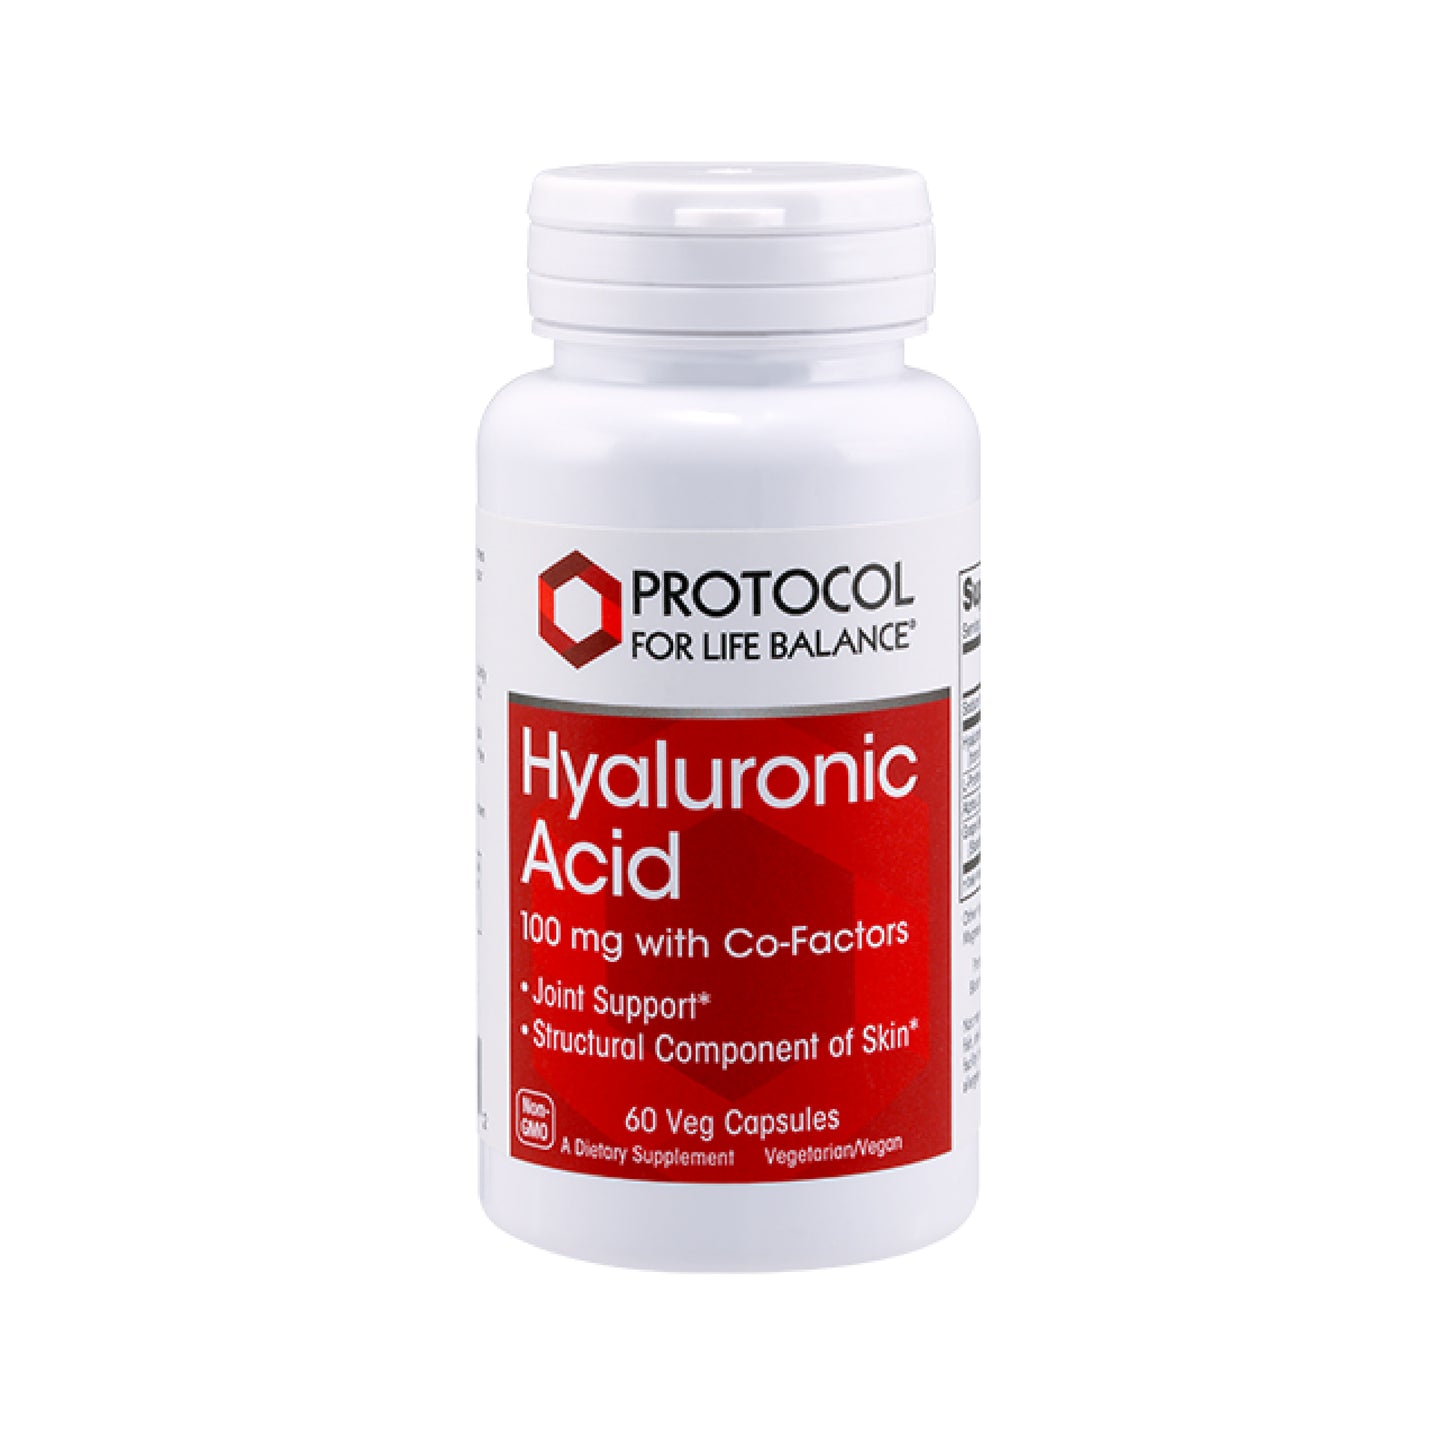 Protocol for Life Balance, Hyaluronic Acid, 100 mg, 60 Veg Capsules - Bloom Concept